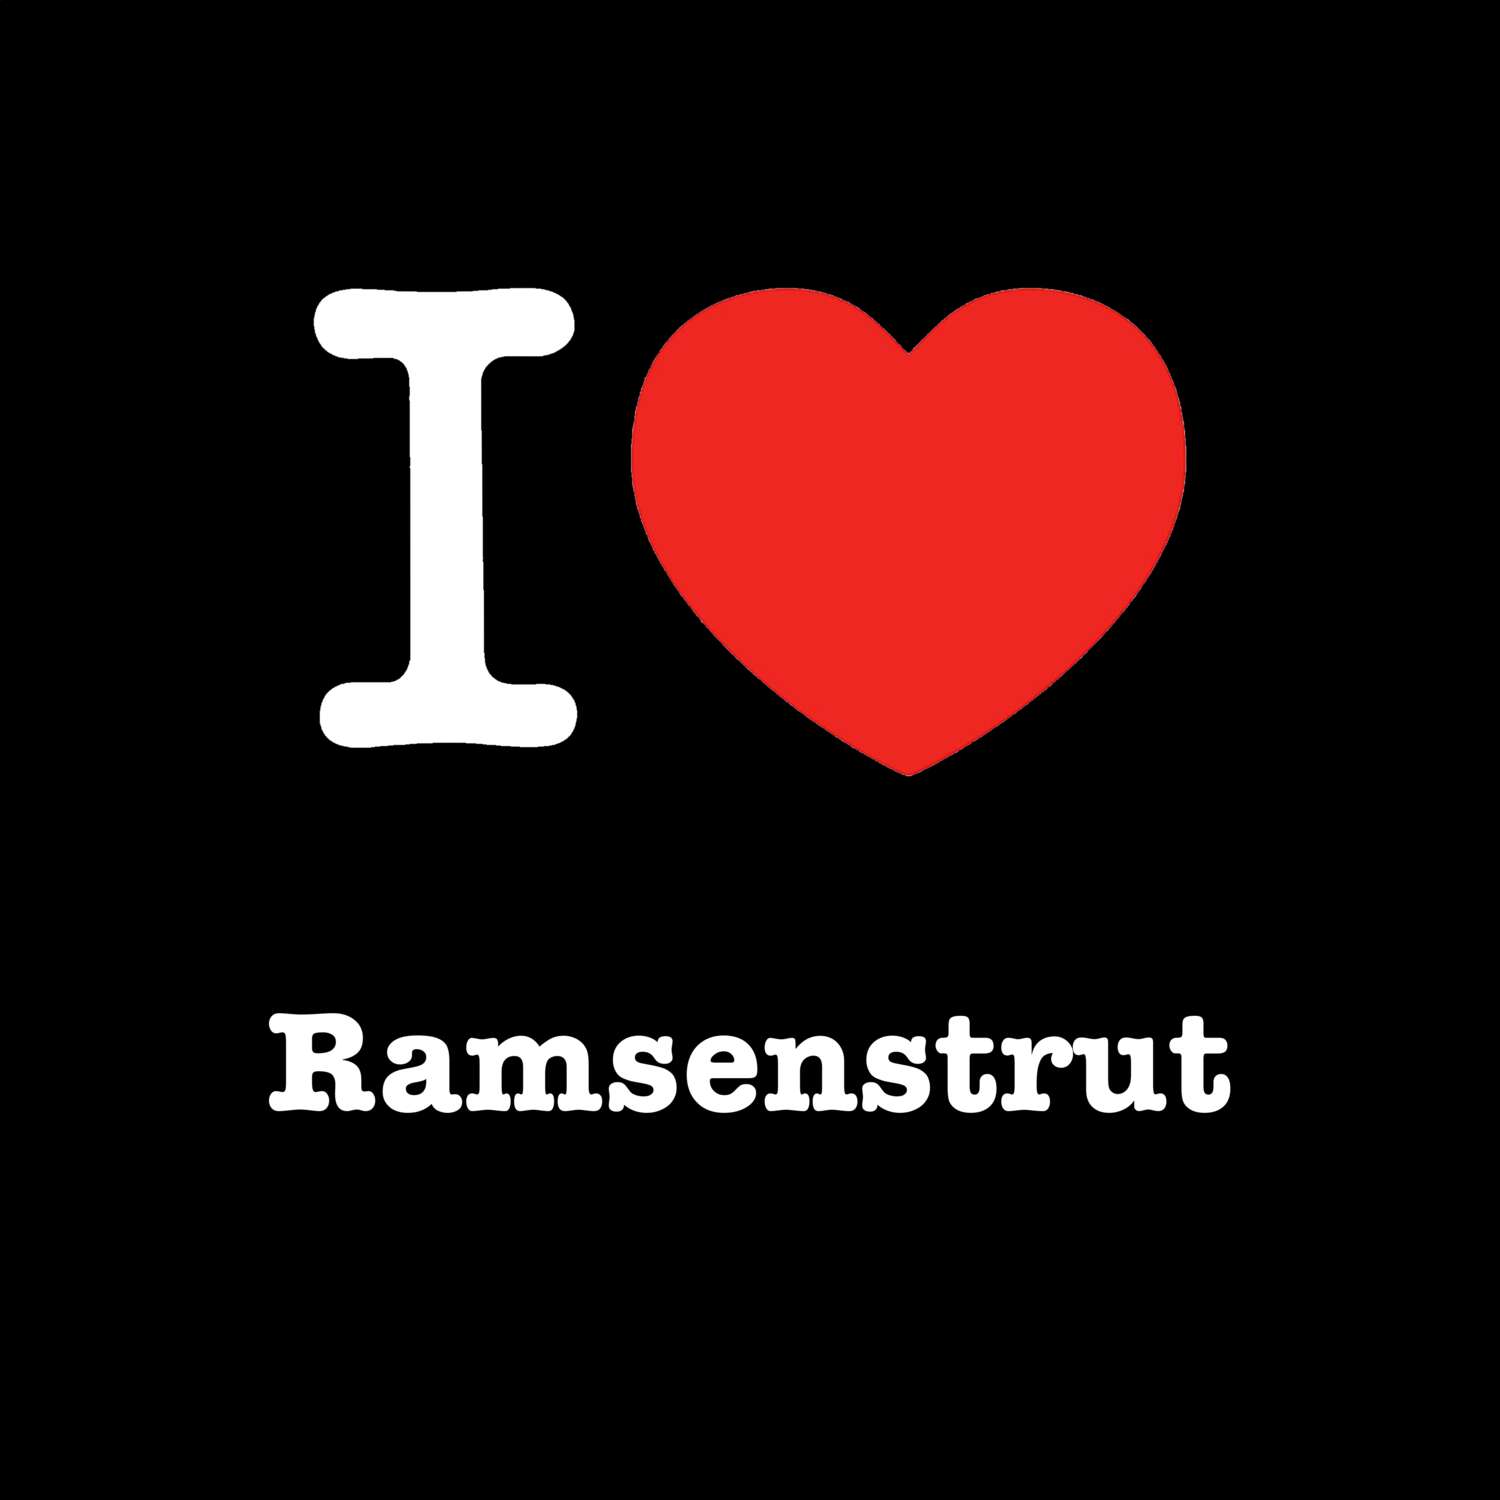 Ramsenstrut T-Shirt »I love«